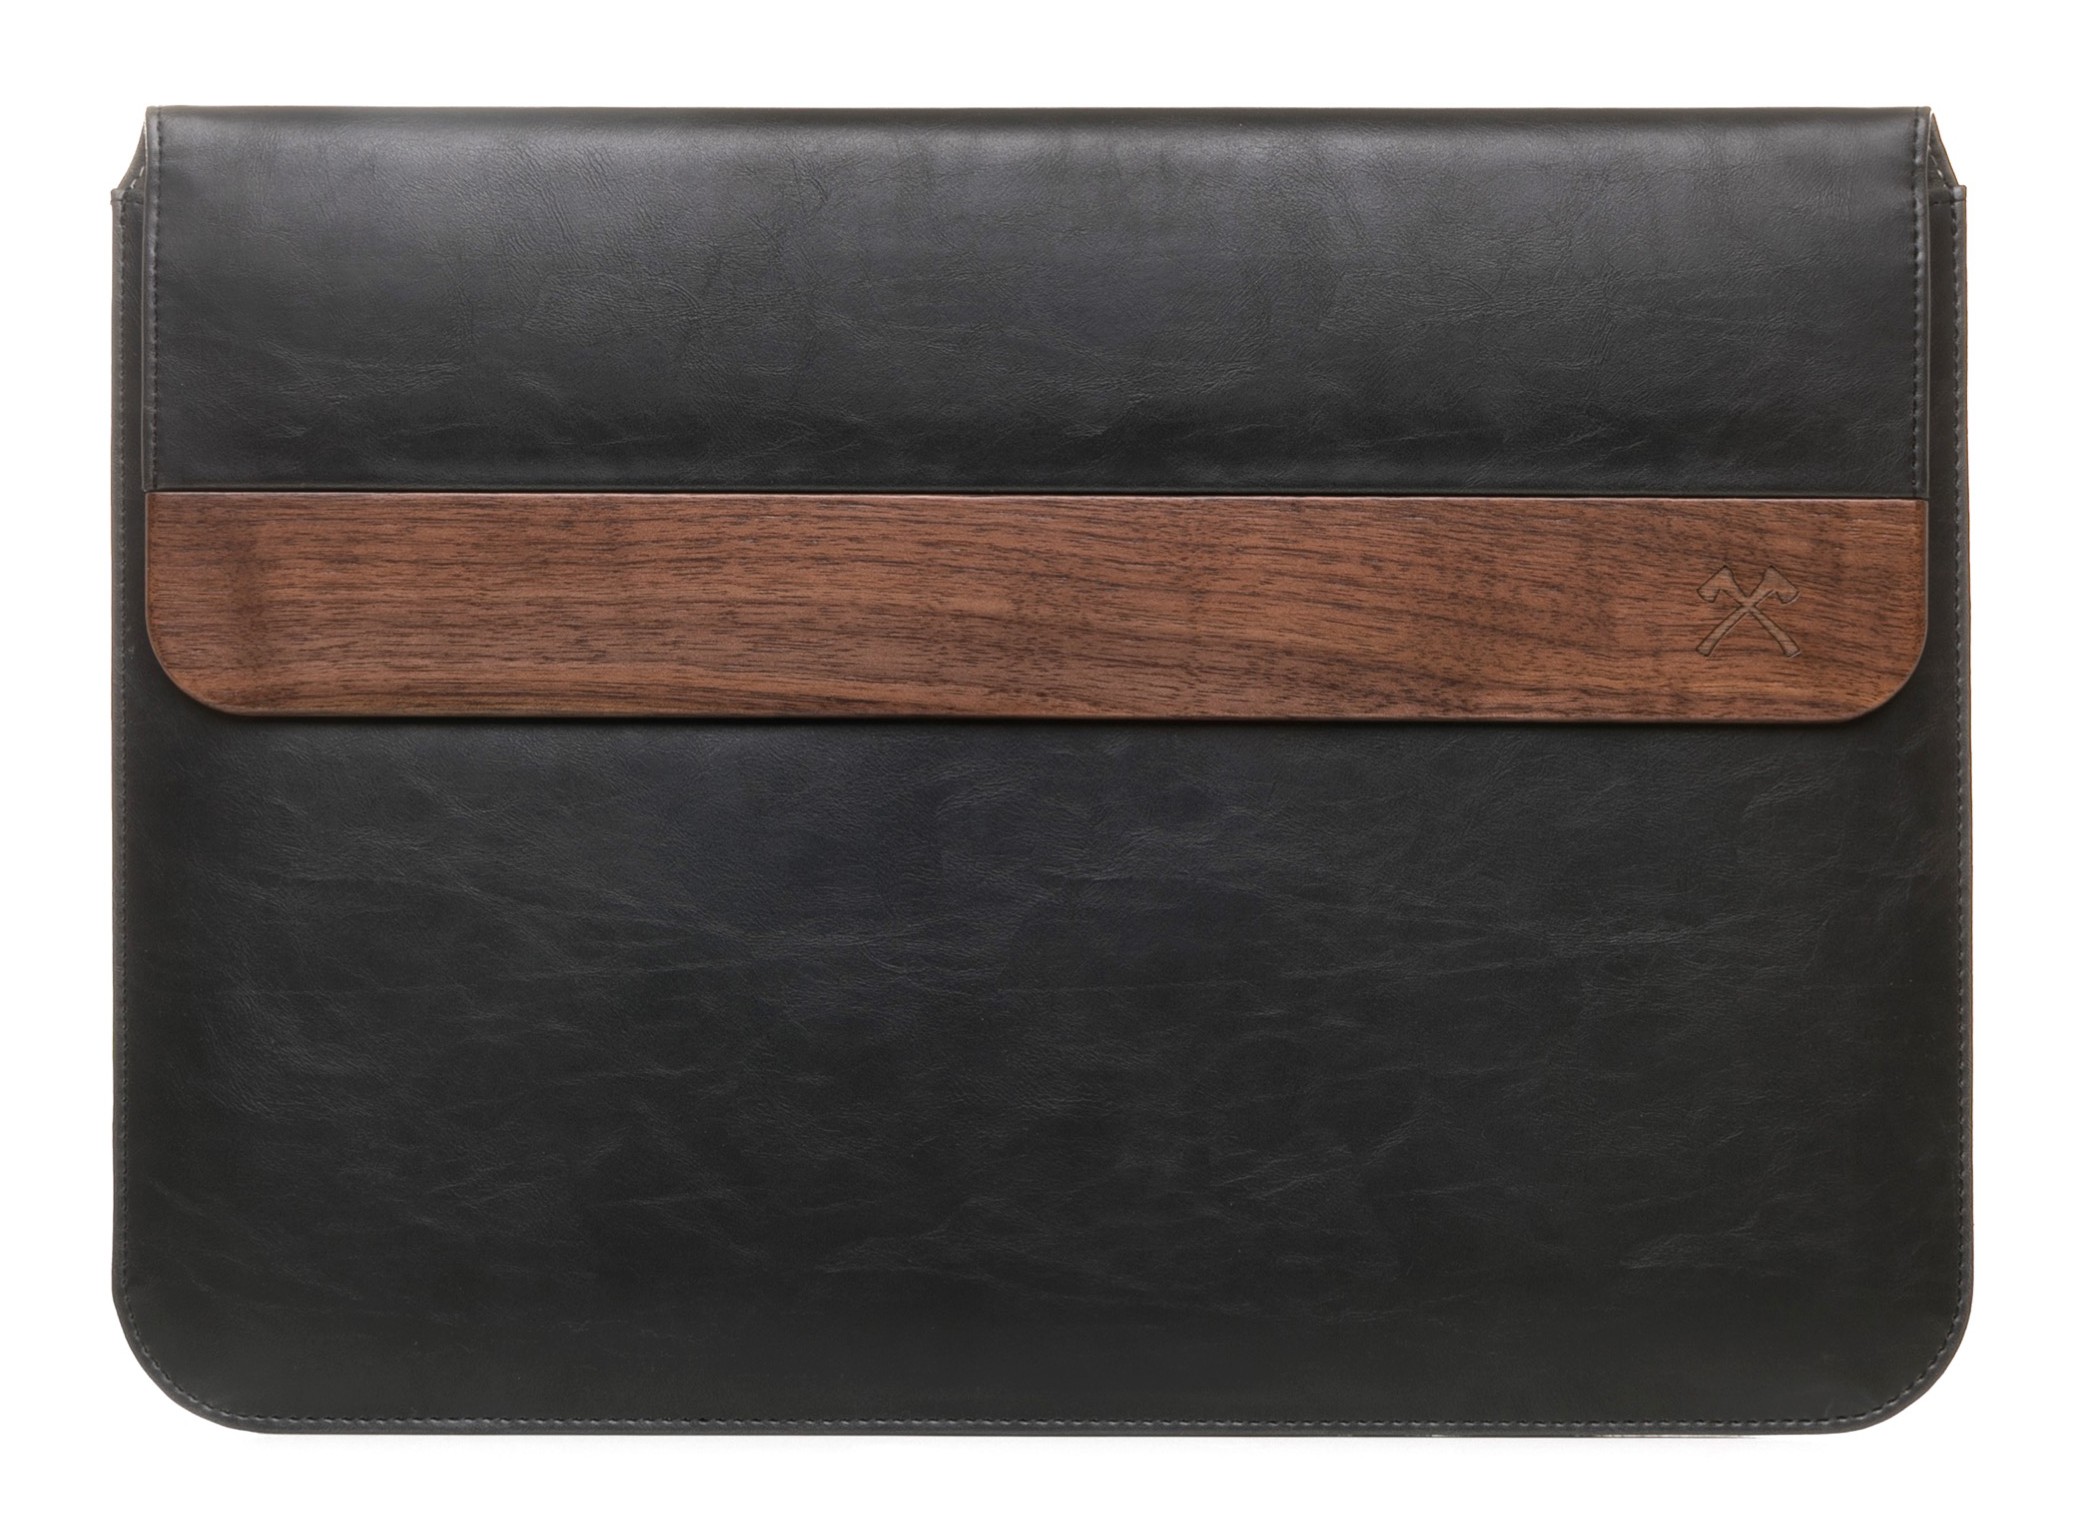 Woodcessories - Walnut / Black Leather / MacBook Bag - MacBook 13